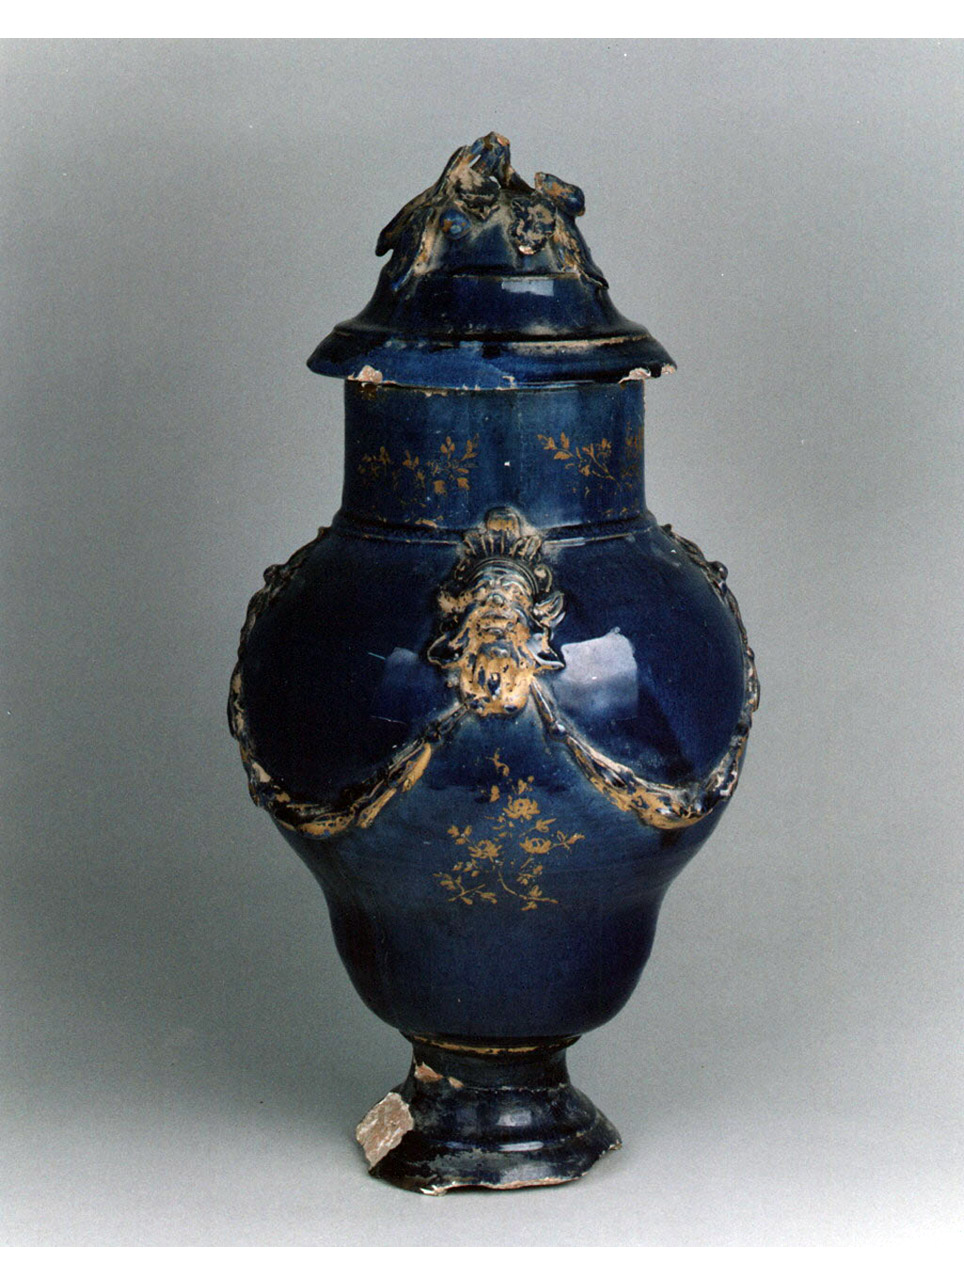 motivi decorativi floreali (vaso) - manifattura siciliana (sec. XVIII)